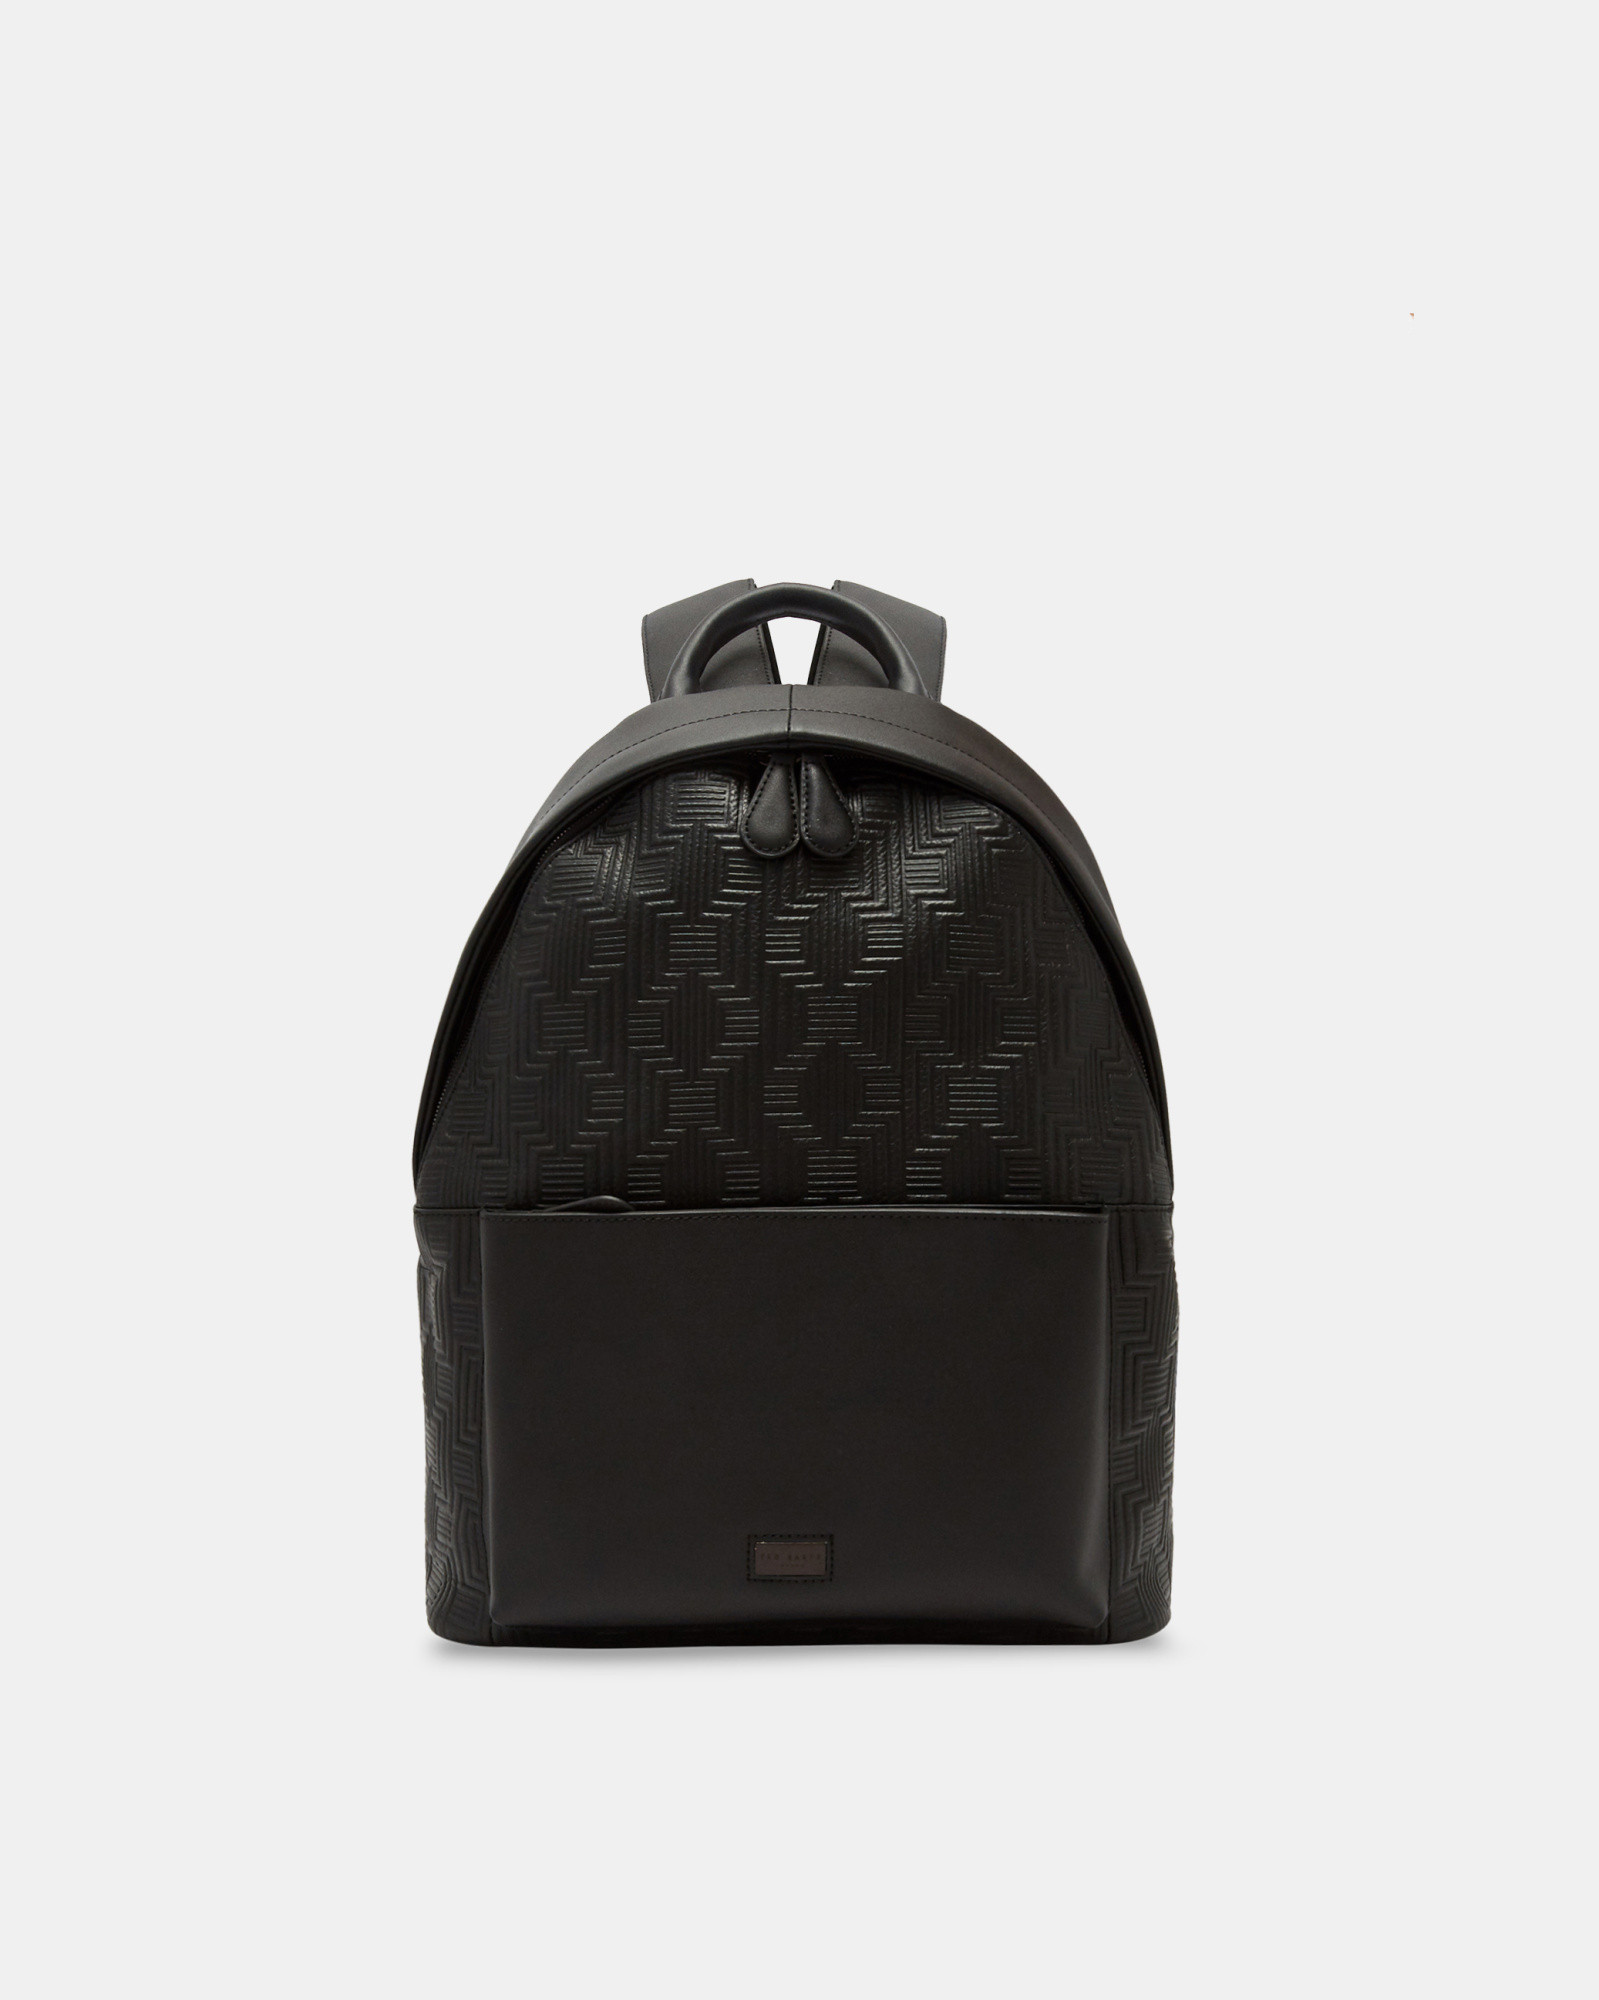 FLOOROW Embossed leather backpack